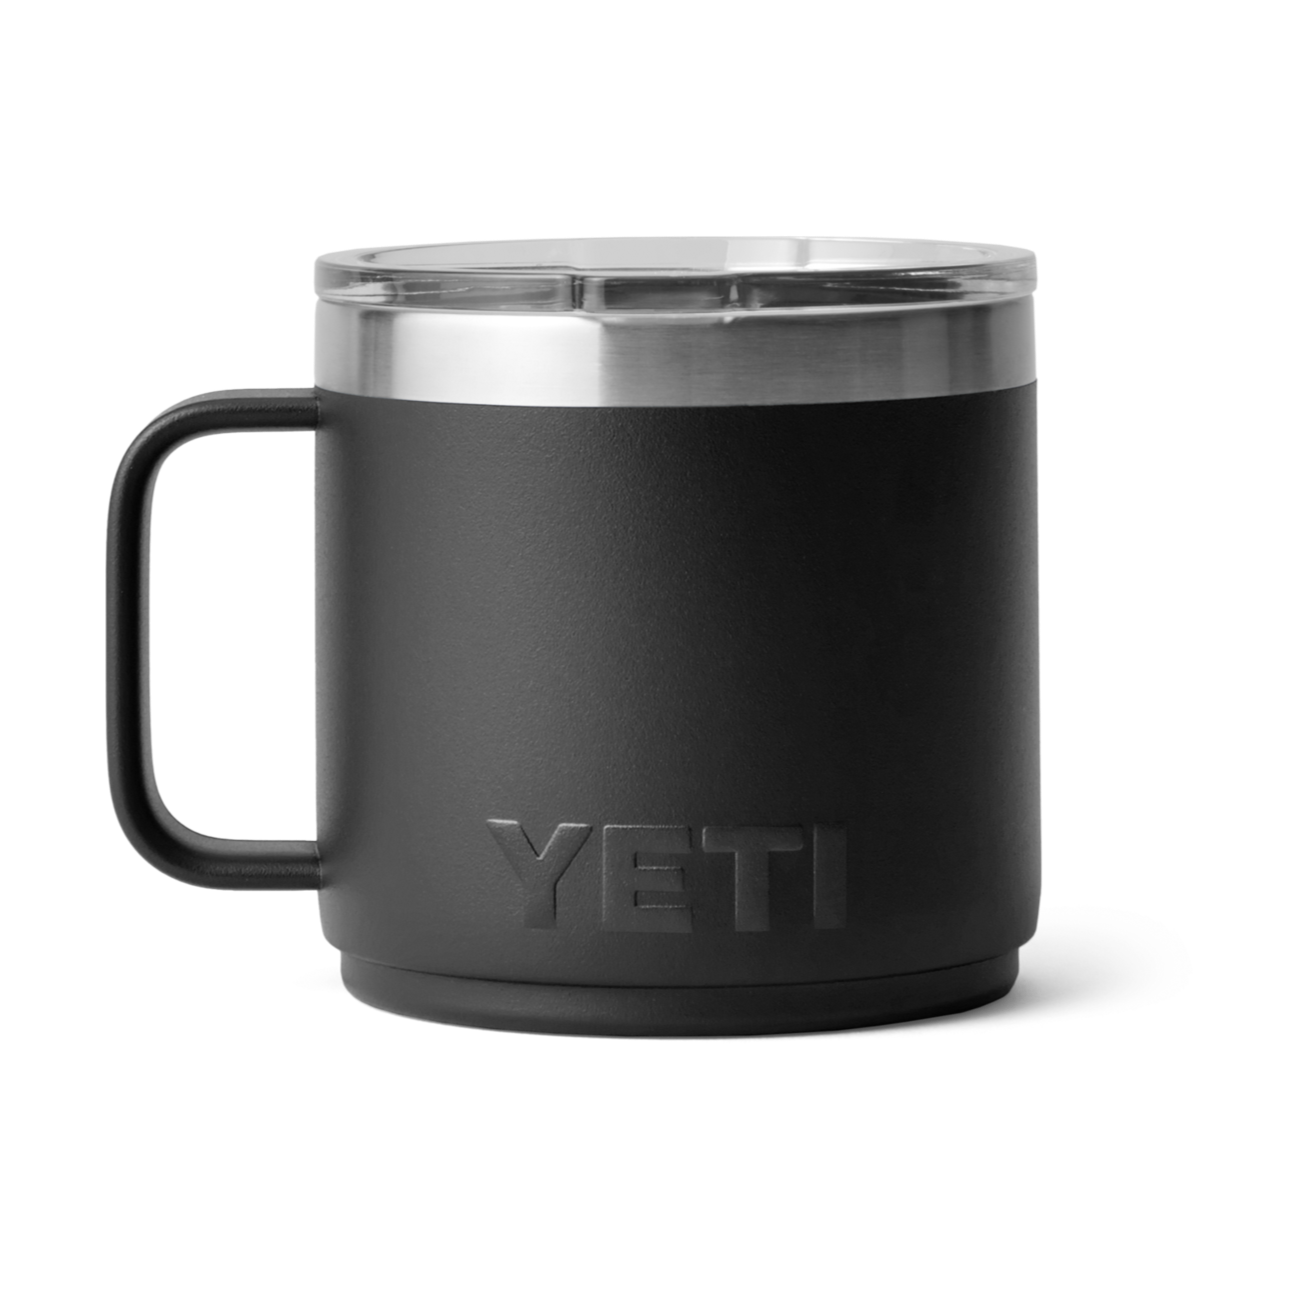 Yeti Rambler 21071501009 Travel Mug, 14 oz Capacity, MagS